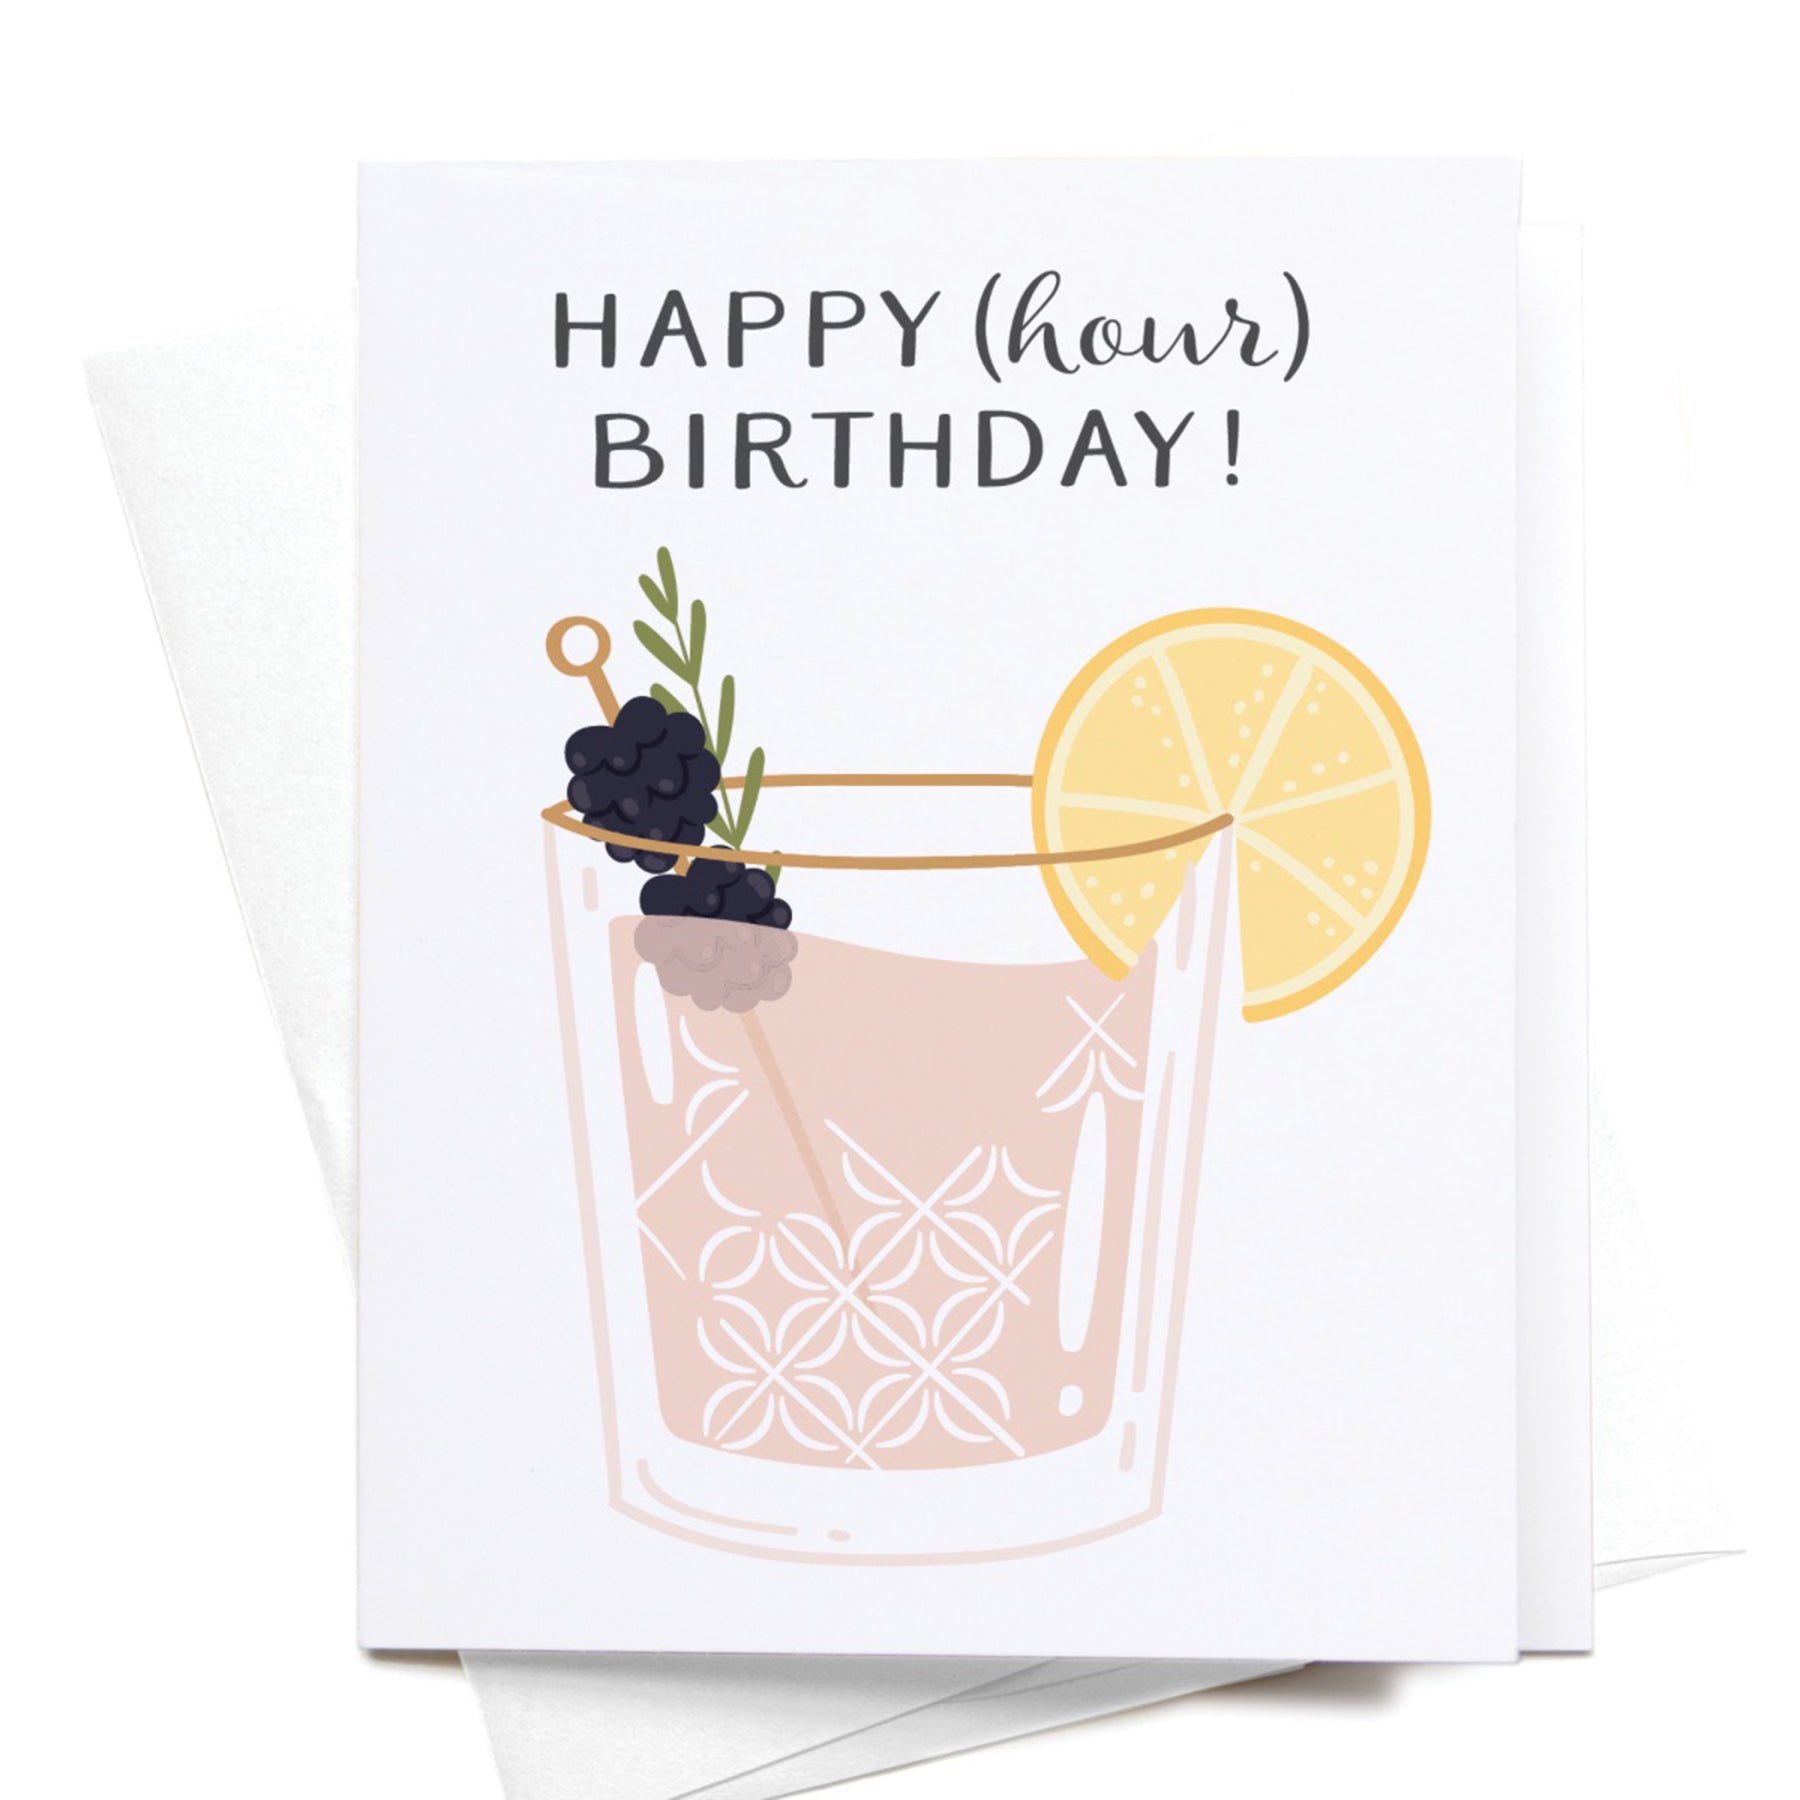 Happy (hour) Birthday Card